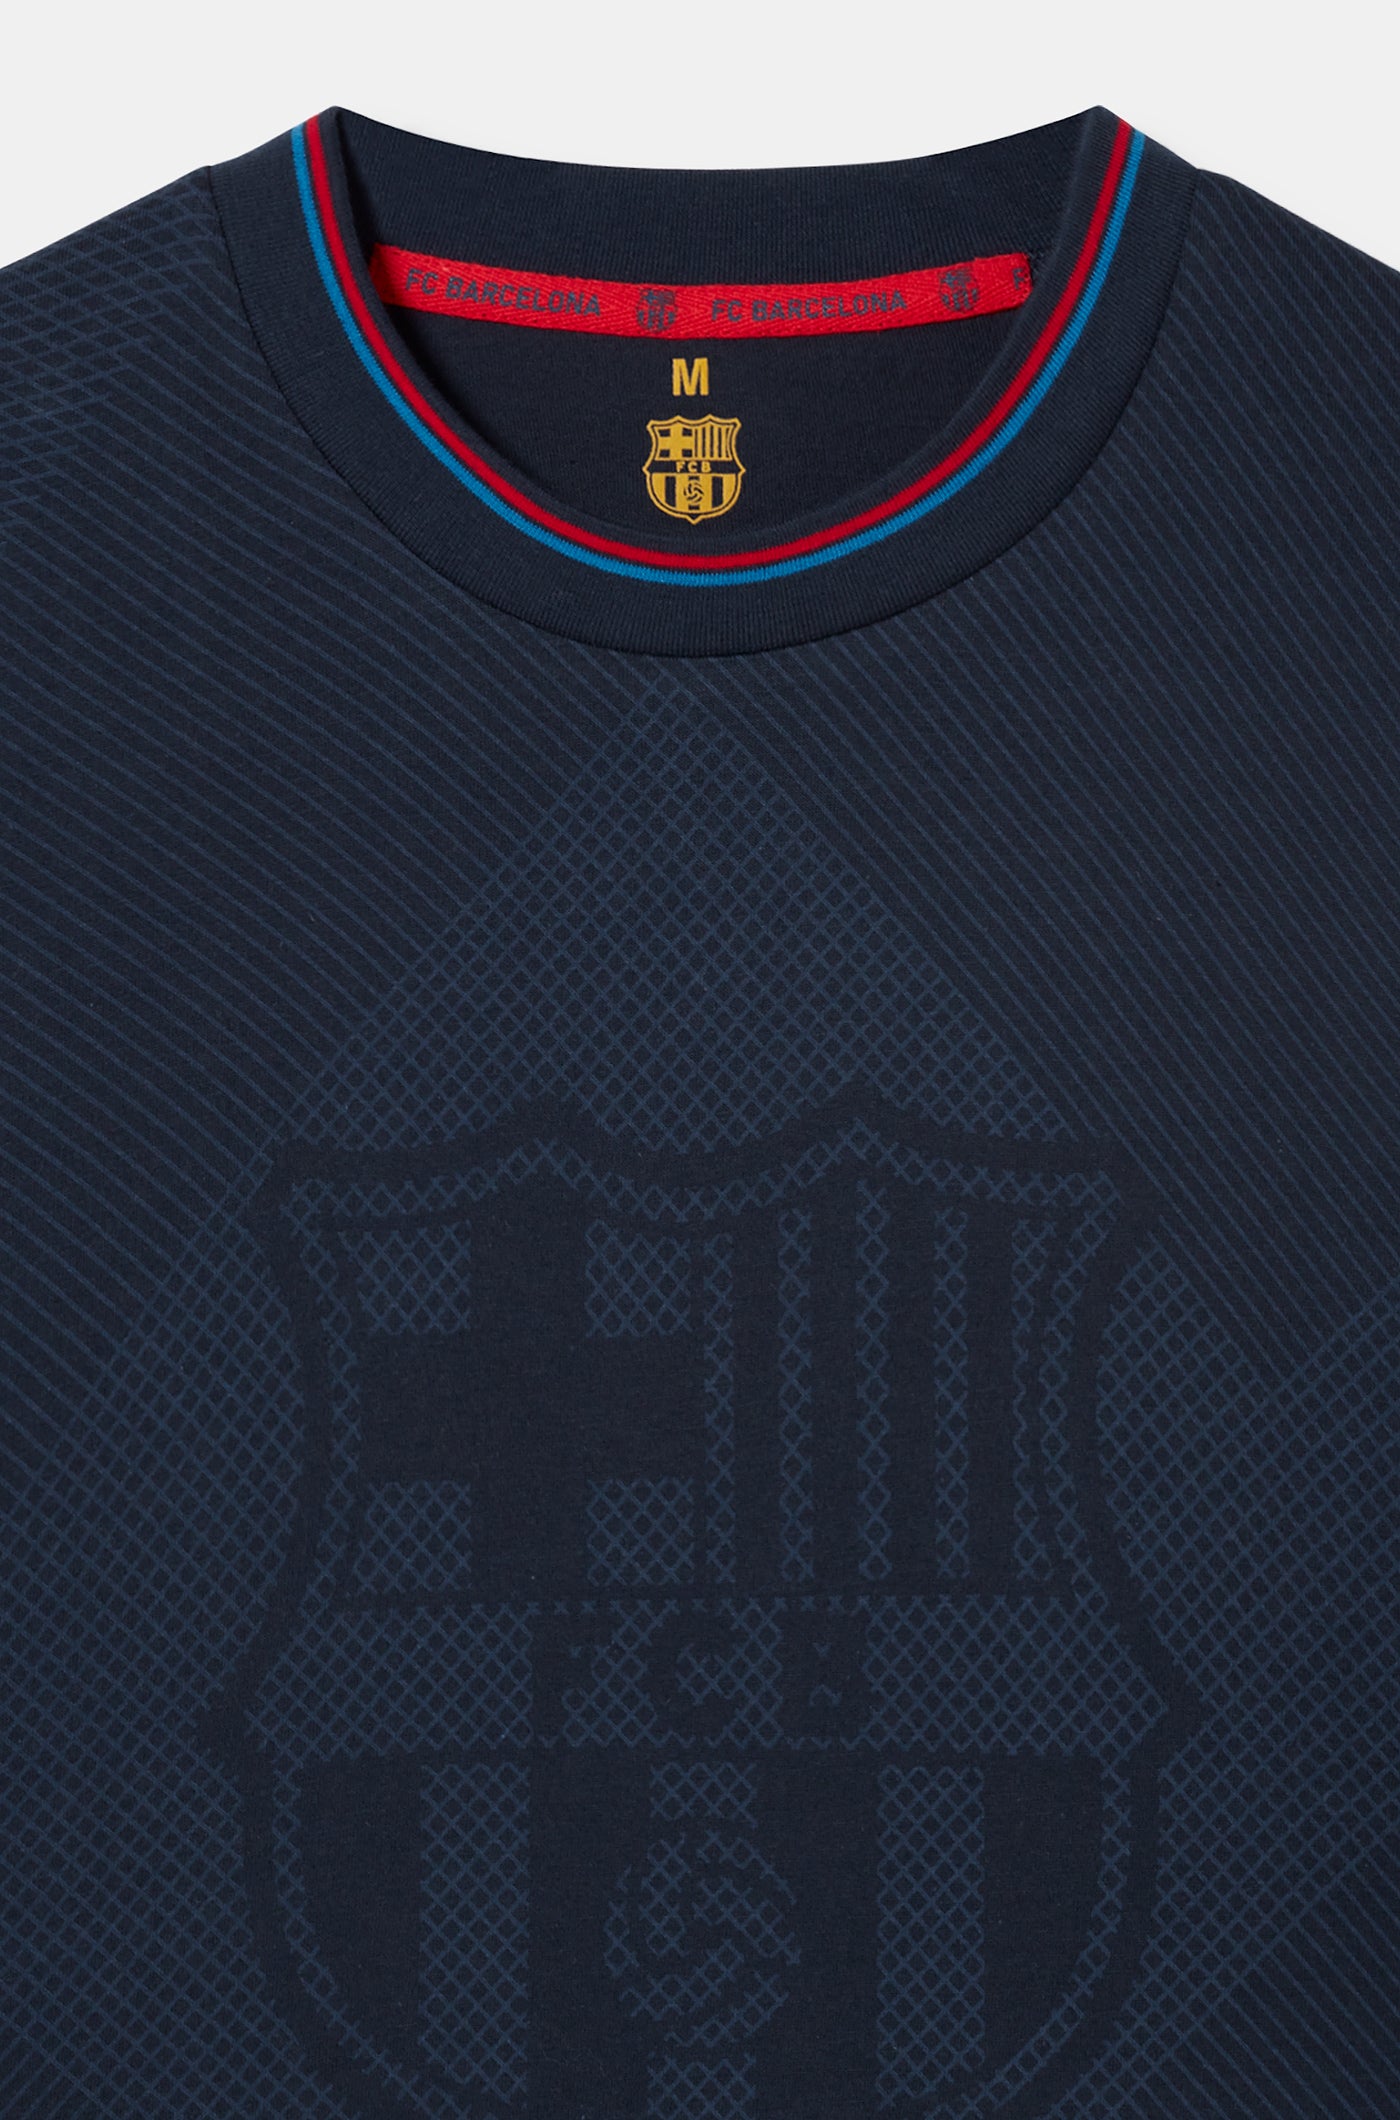 FC Barcelona pyjamas with navy crest